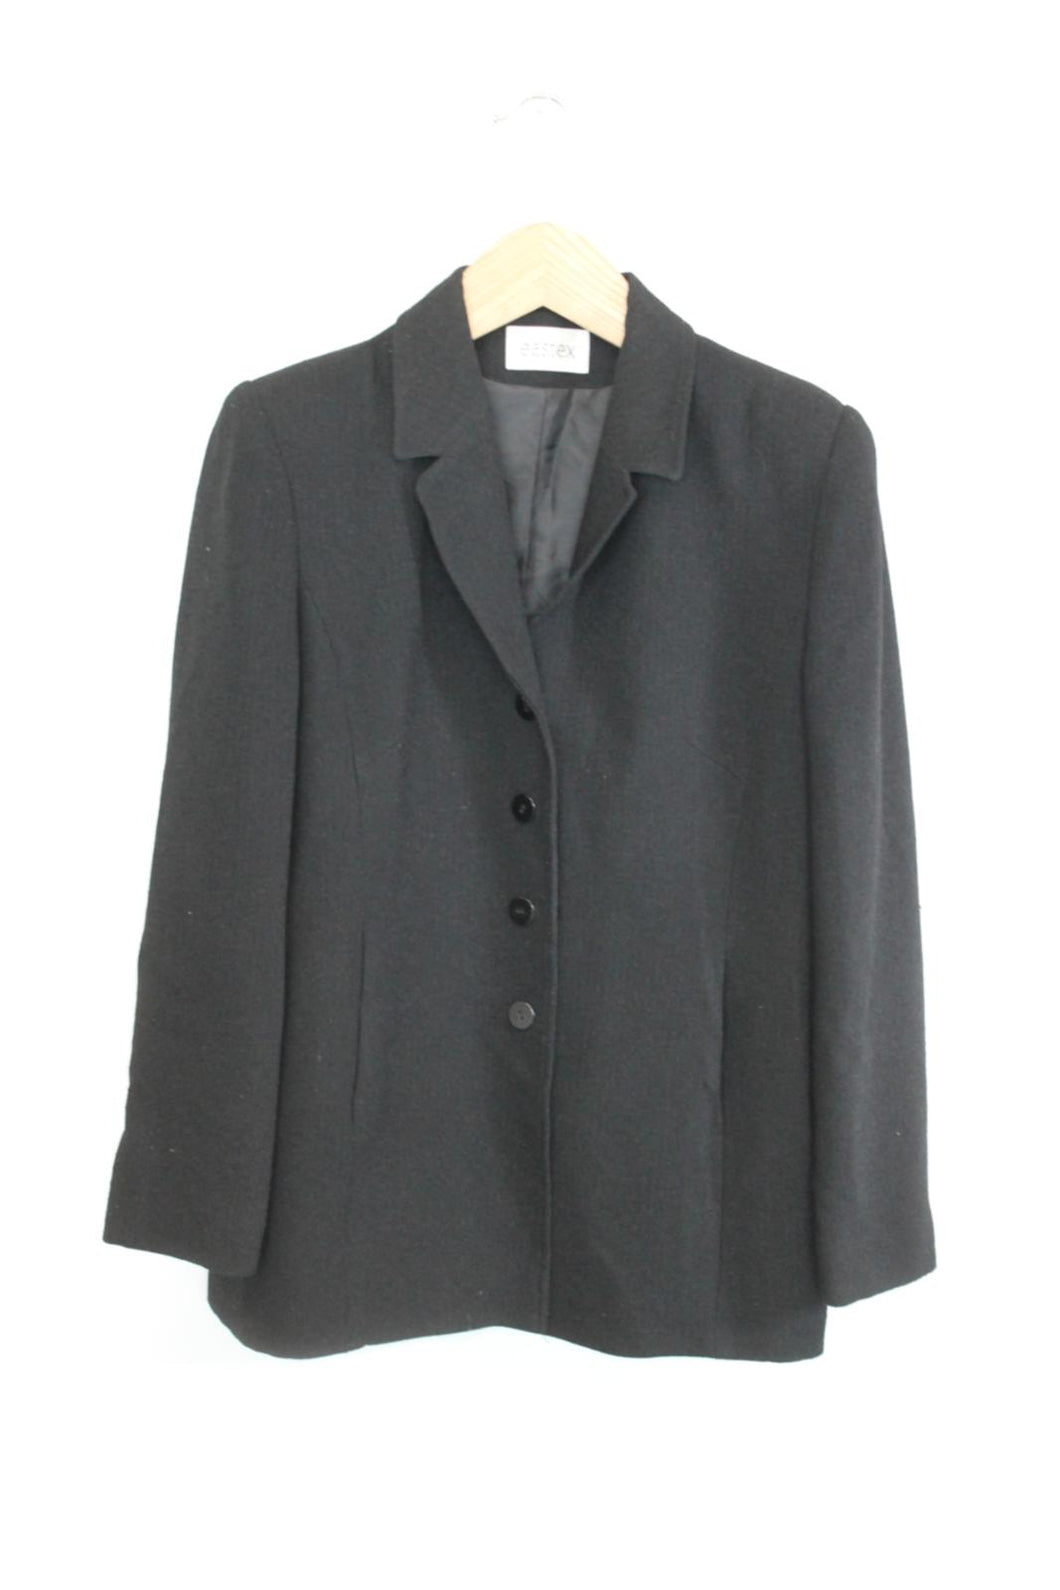 WASTEX Ladies Black Long Sleeve Collared Button Down Jacket EU40 UK12